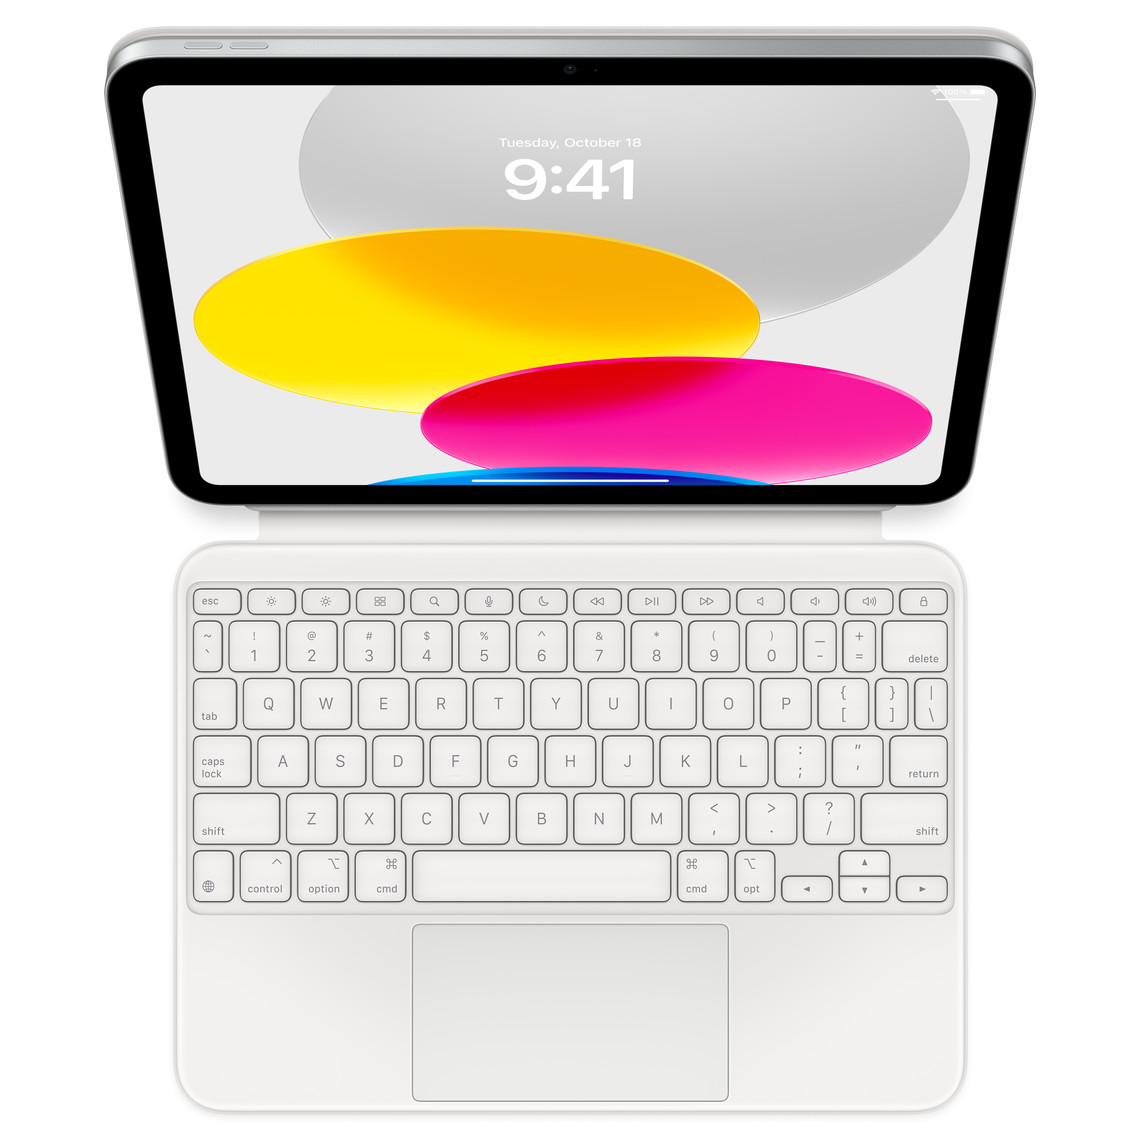 Top down view showing iPad connected to Magic Keyboard Folio laying flat. Screen displaying coloured circular graphics.